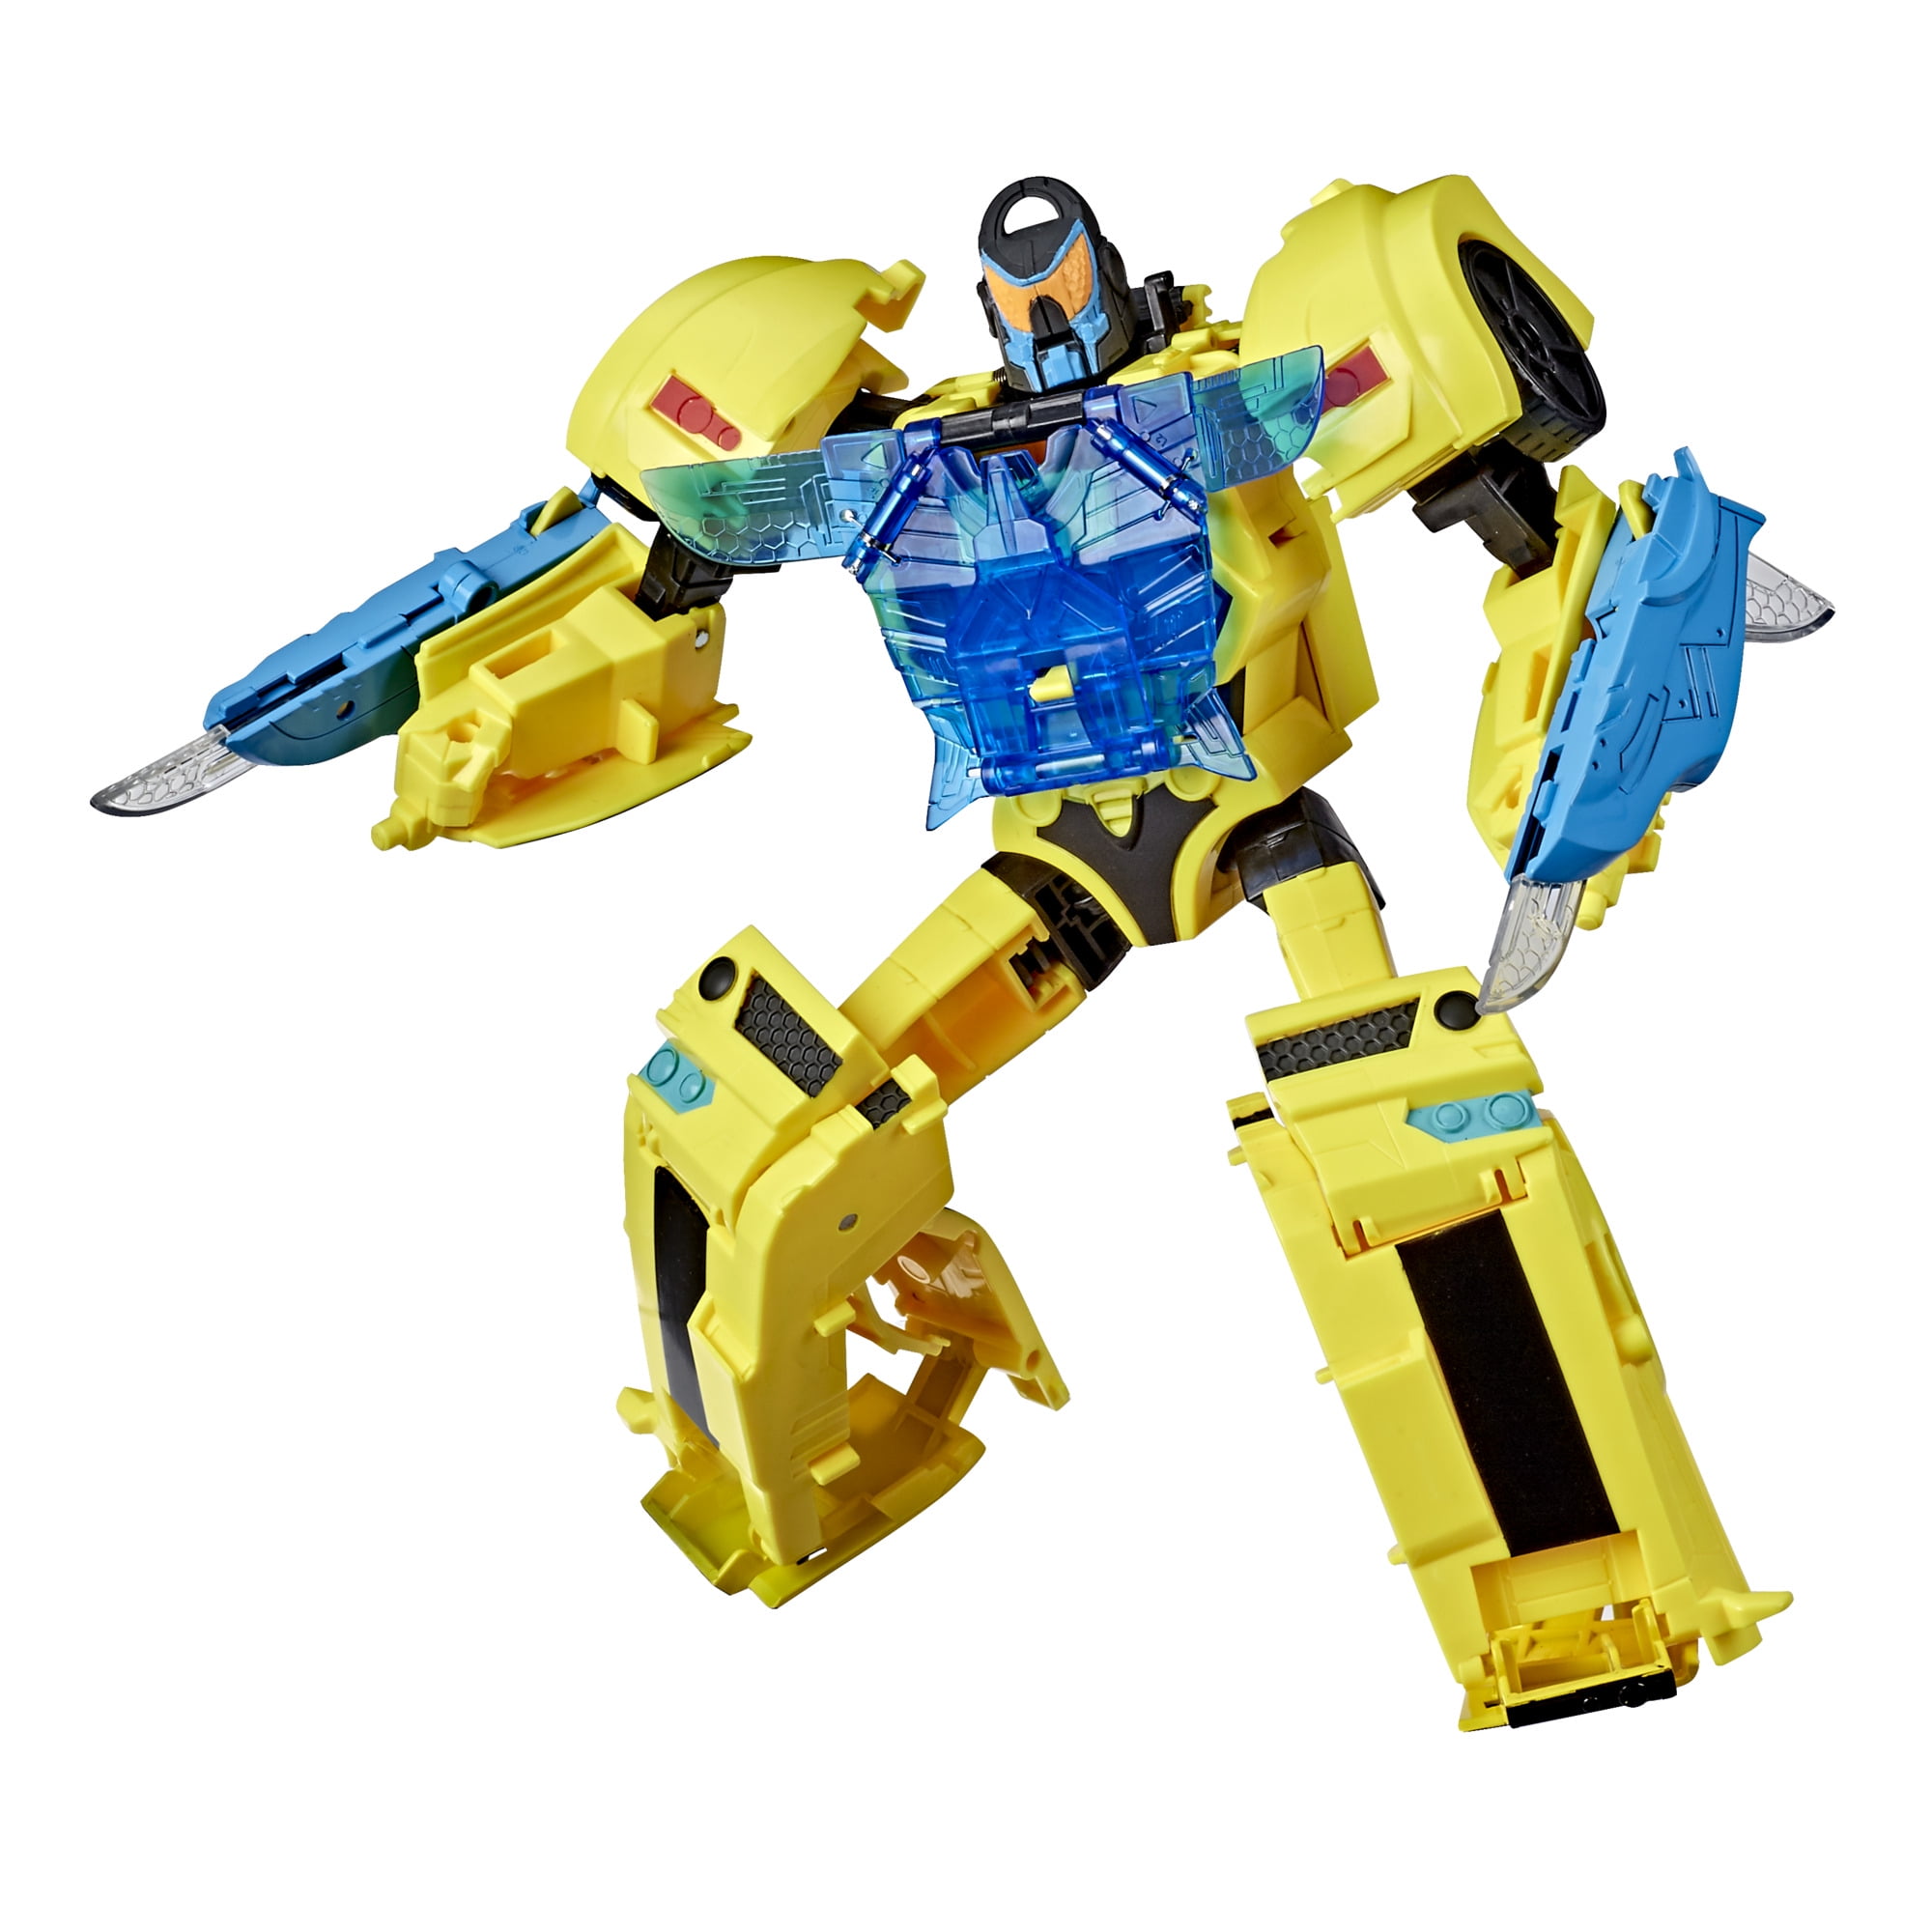 RACK'N'RUIN Action Figure for sale online Hasbro Transformers Bumblebee Cyberverse Adventures